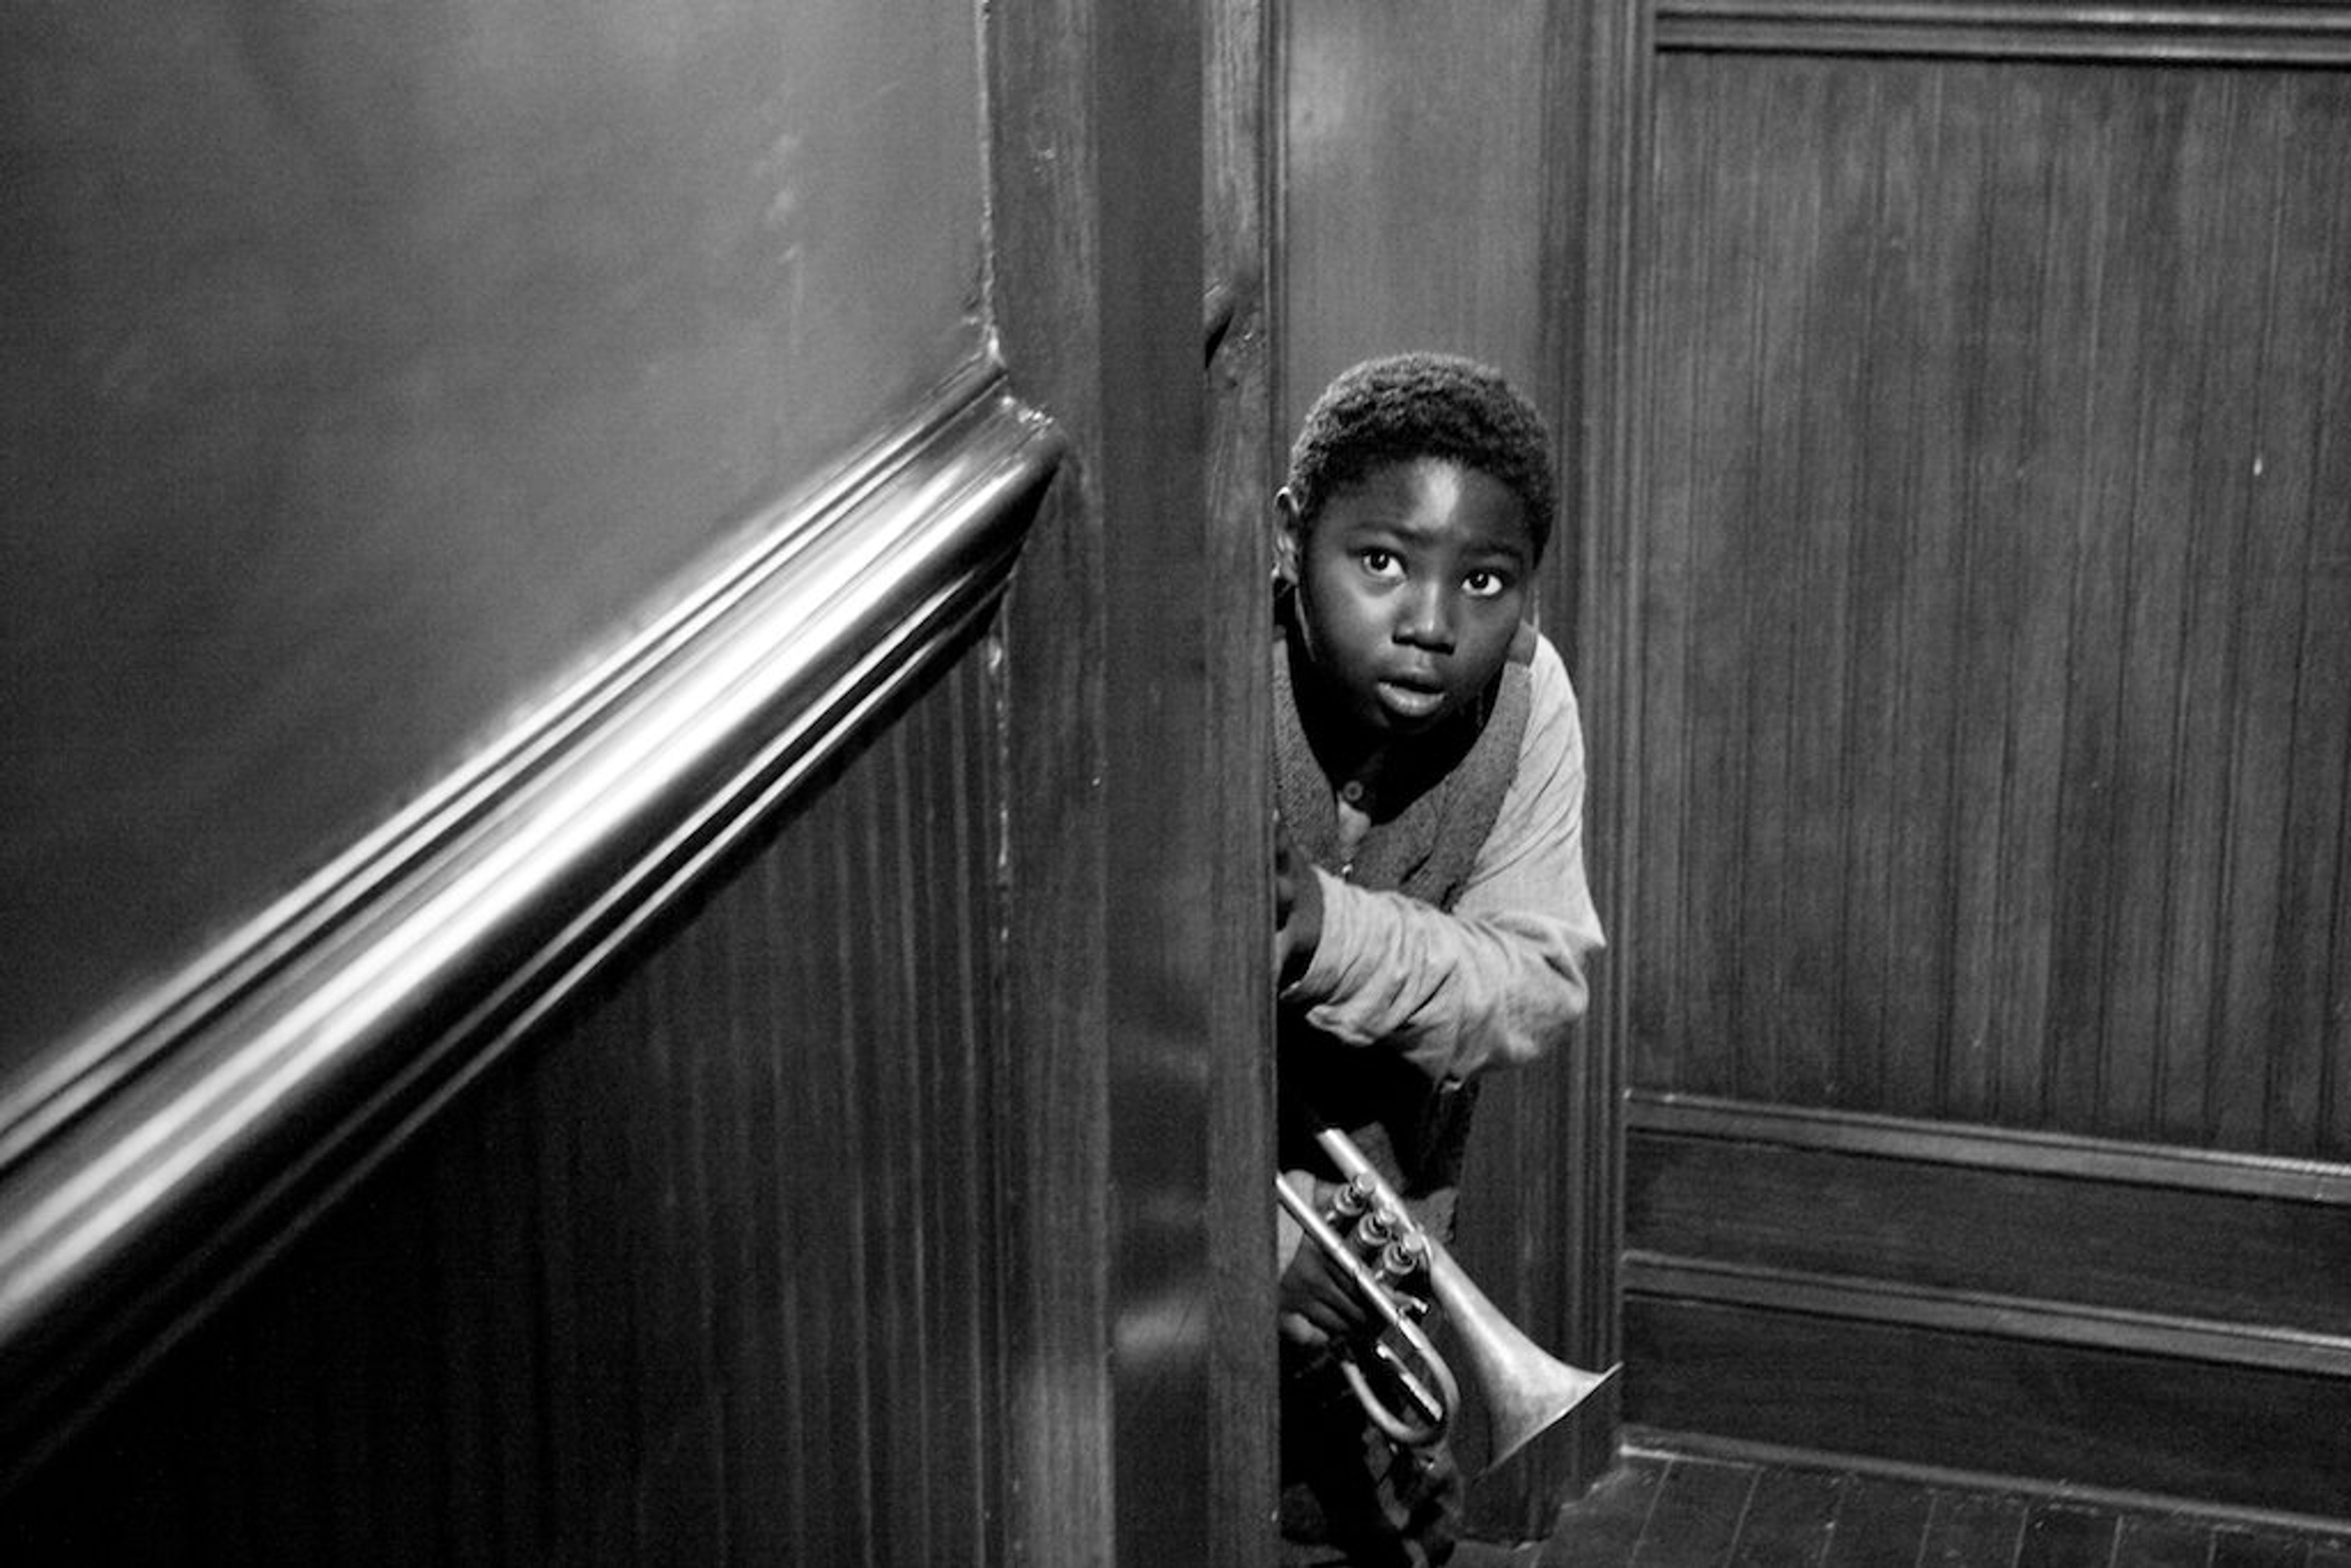 Louis Armstrong as a young boy peeking around a corner